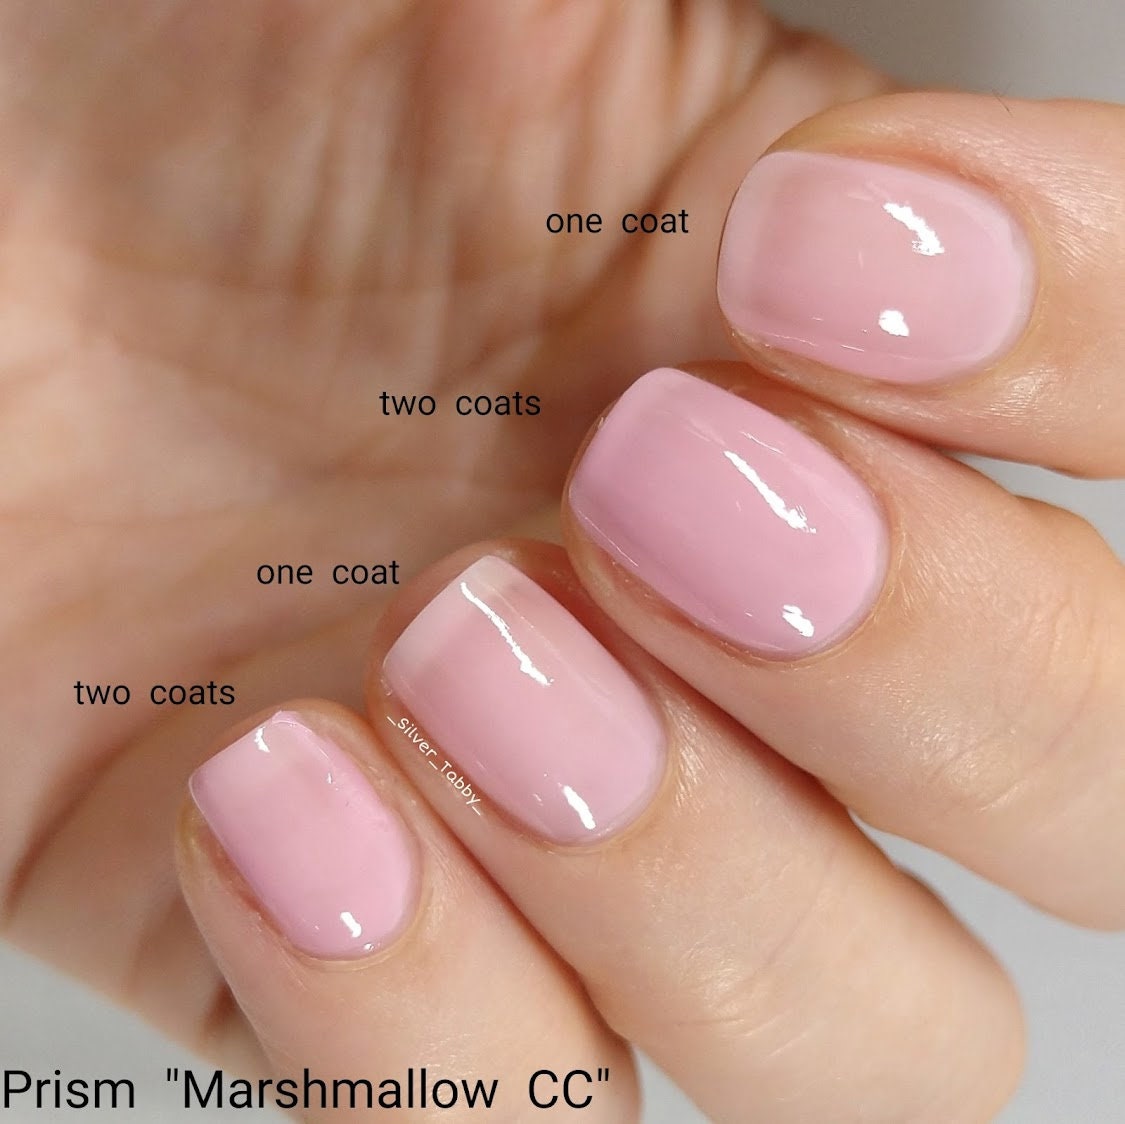 Sheer Fantasy - Gel Couture Sheer Pink Nail Polish - Essie